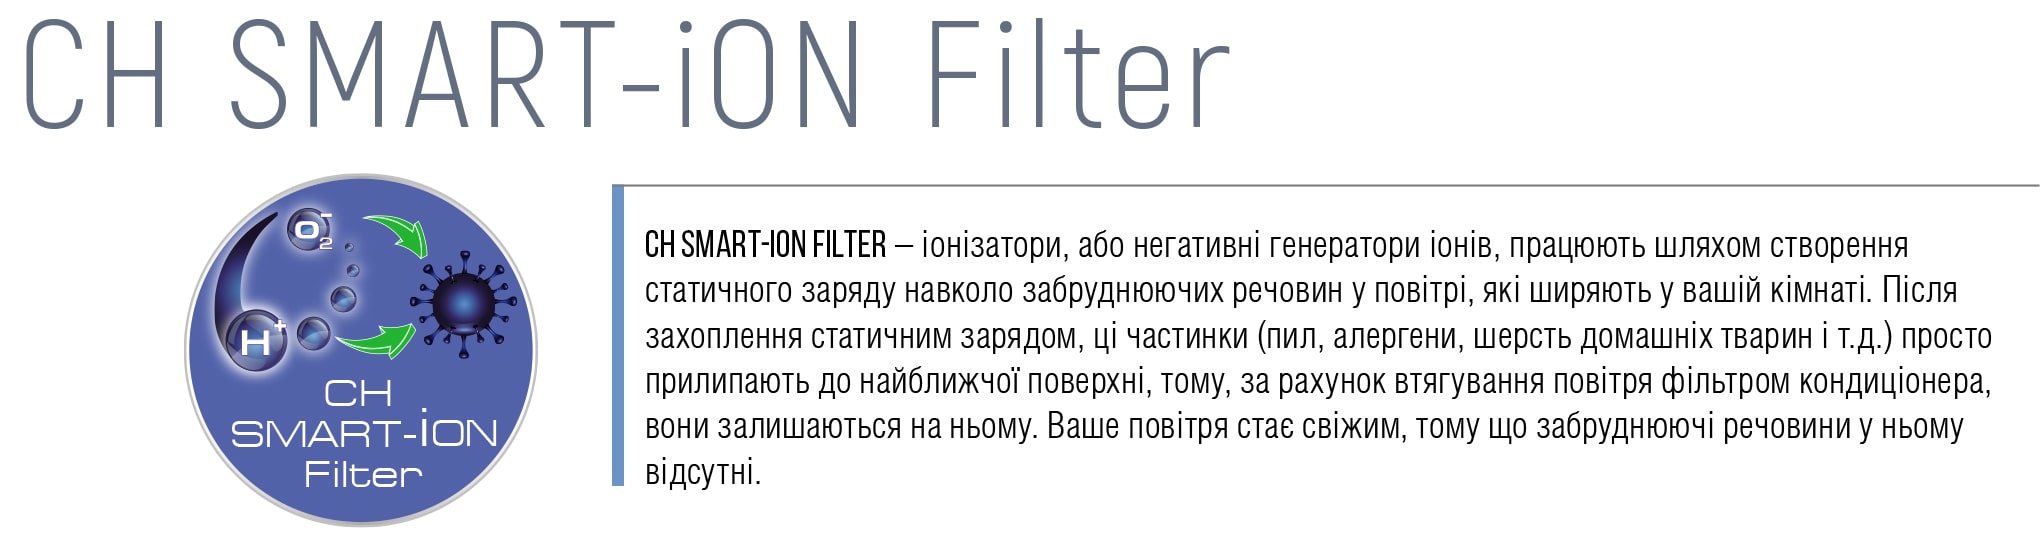 CH SMART-ION Filter кондиционера Cooper&Hunter